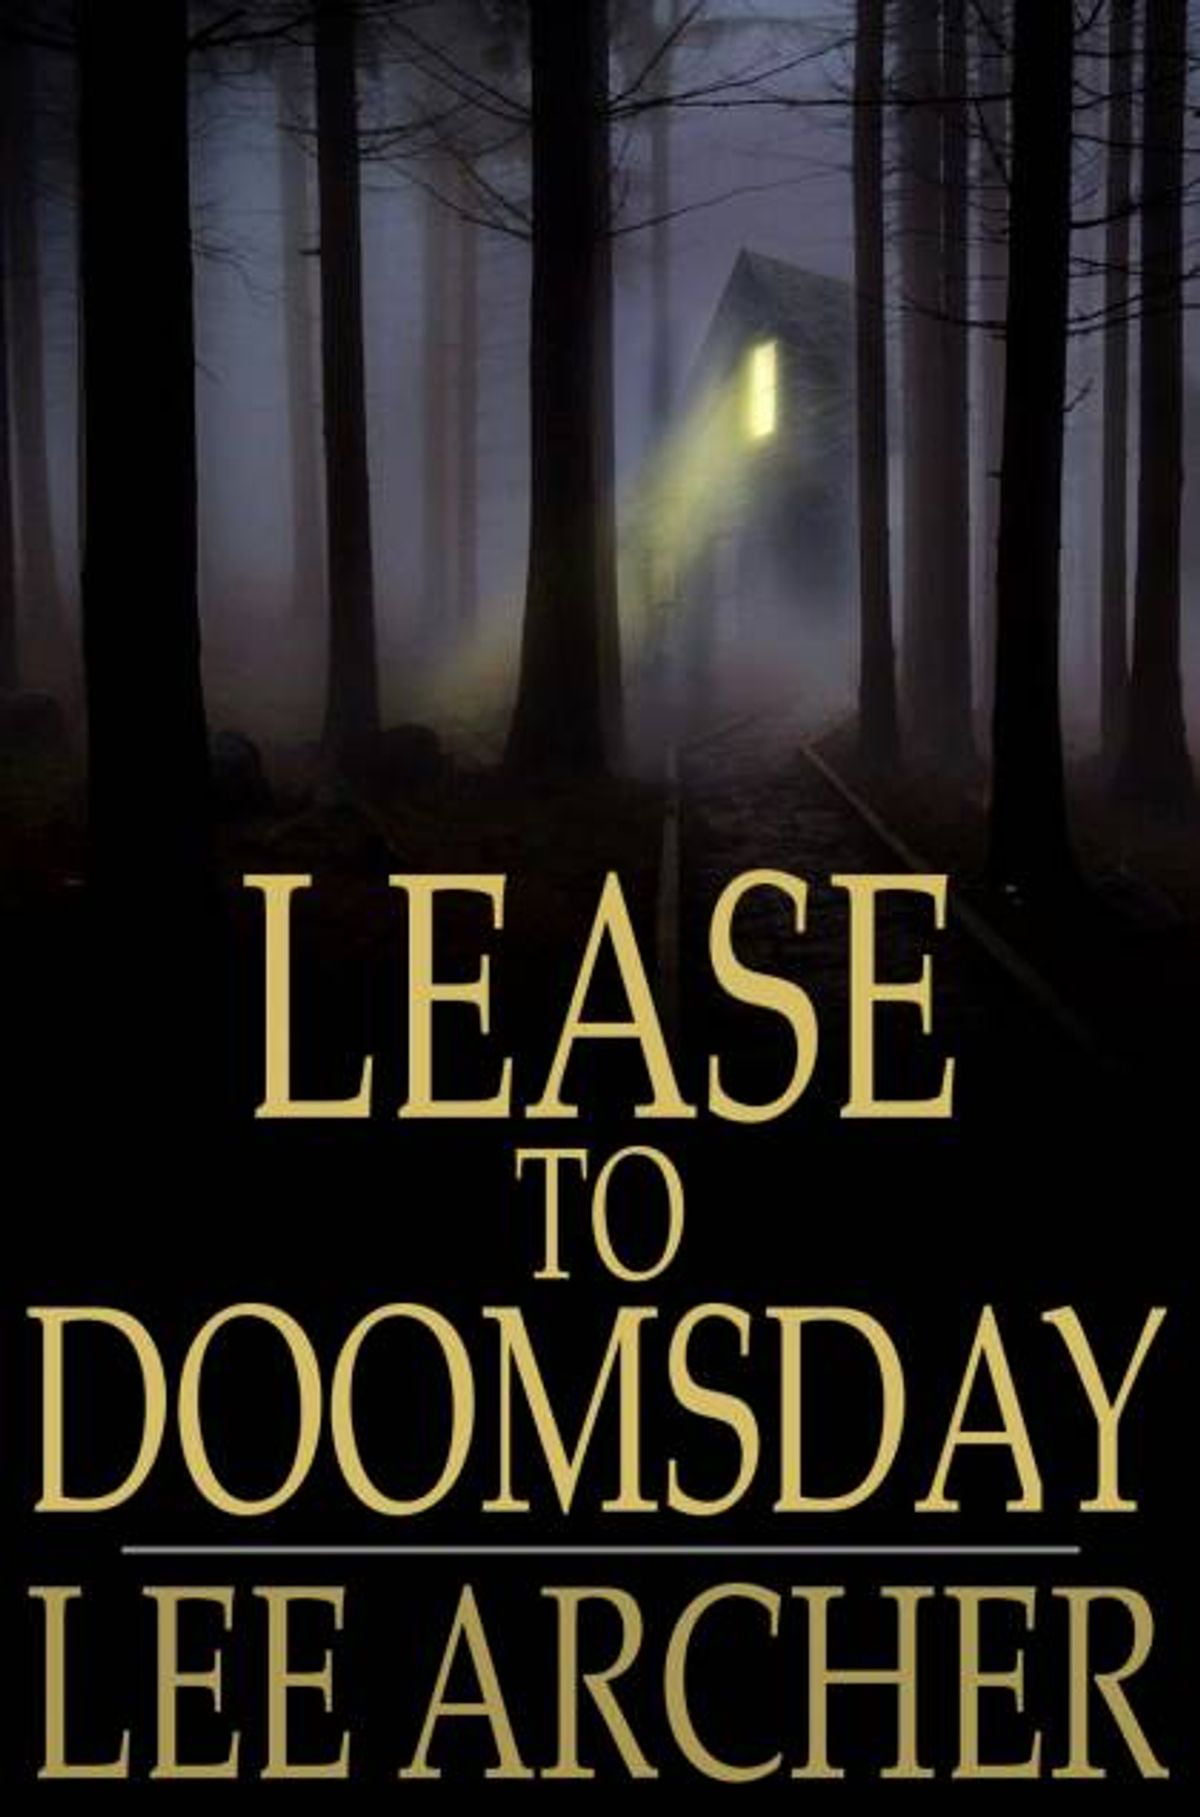 Doomsday by John Peel